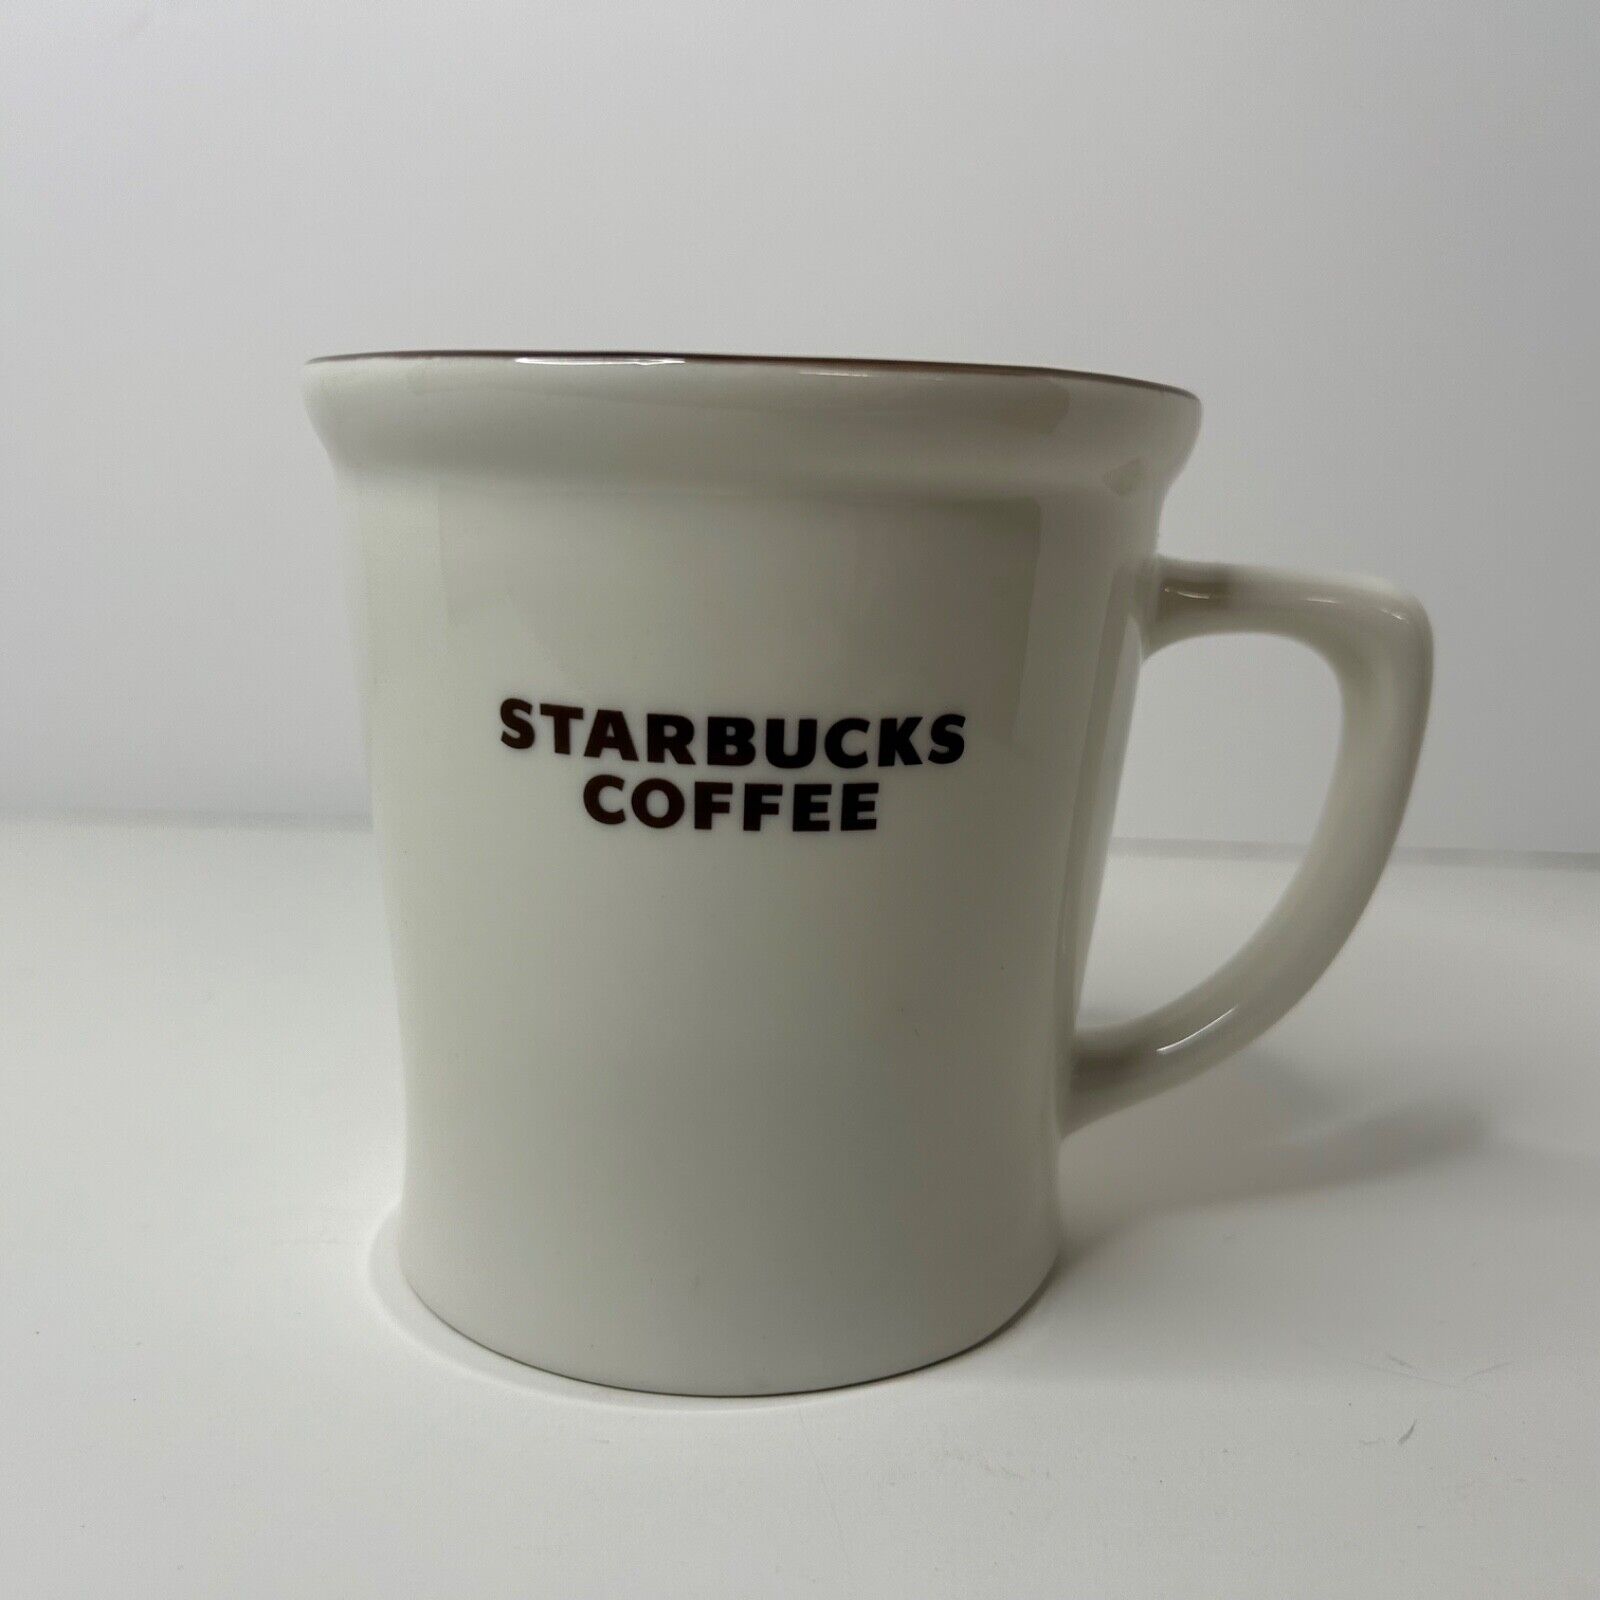 2009 Starbucks Coffee Tea Mug 16 oz Cream White & Brown Inside New Bone China 